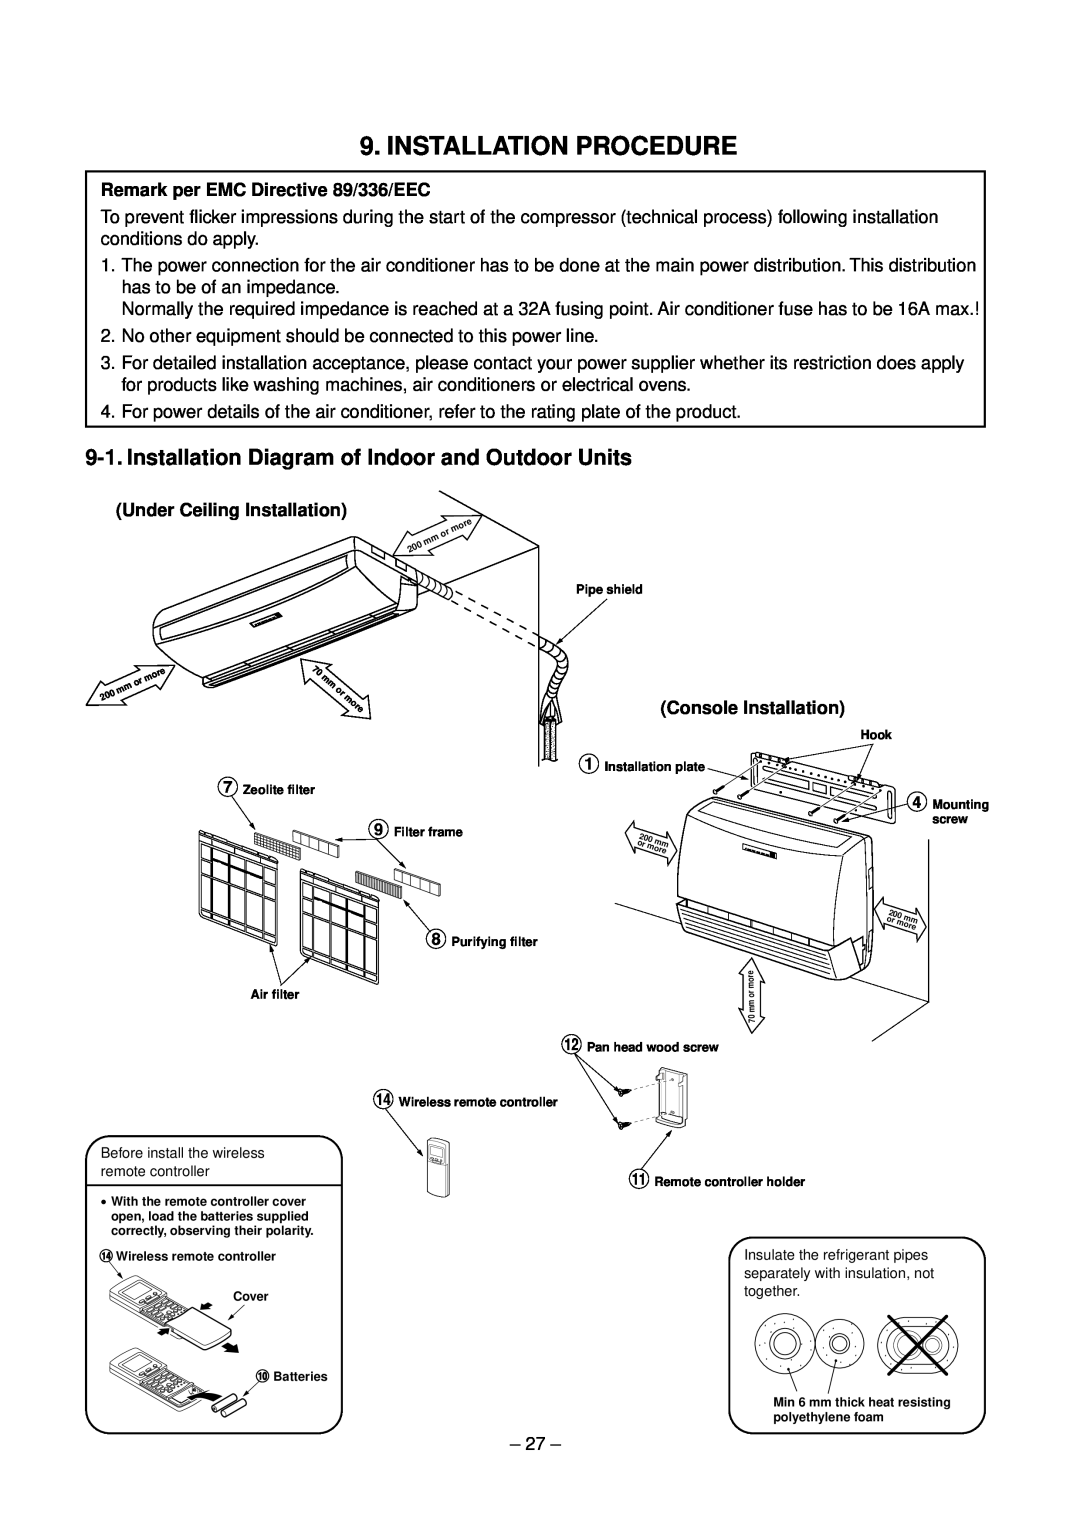 Toshiba RAV-SM560XT-E Installation Procedure, Remark per EMC Directive 89/336/EEC, Under Ceiling Installation 